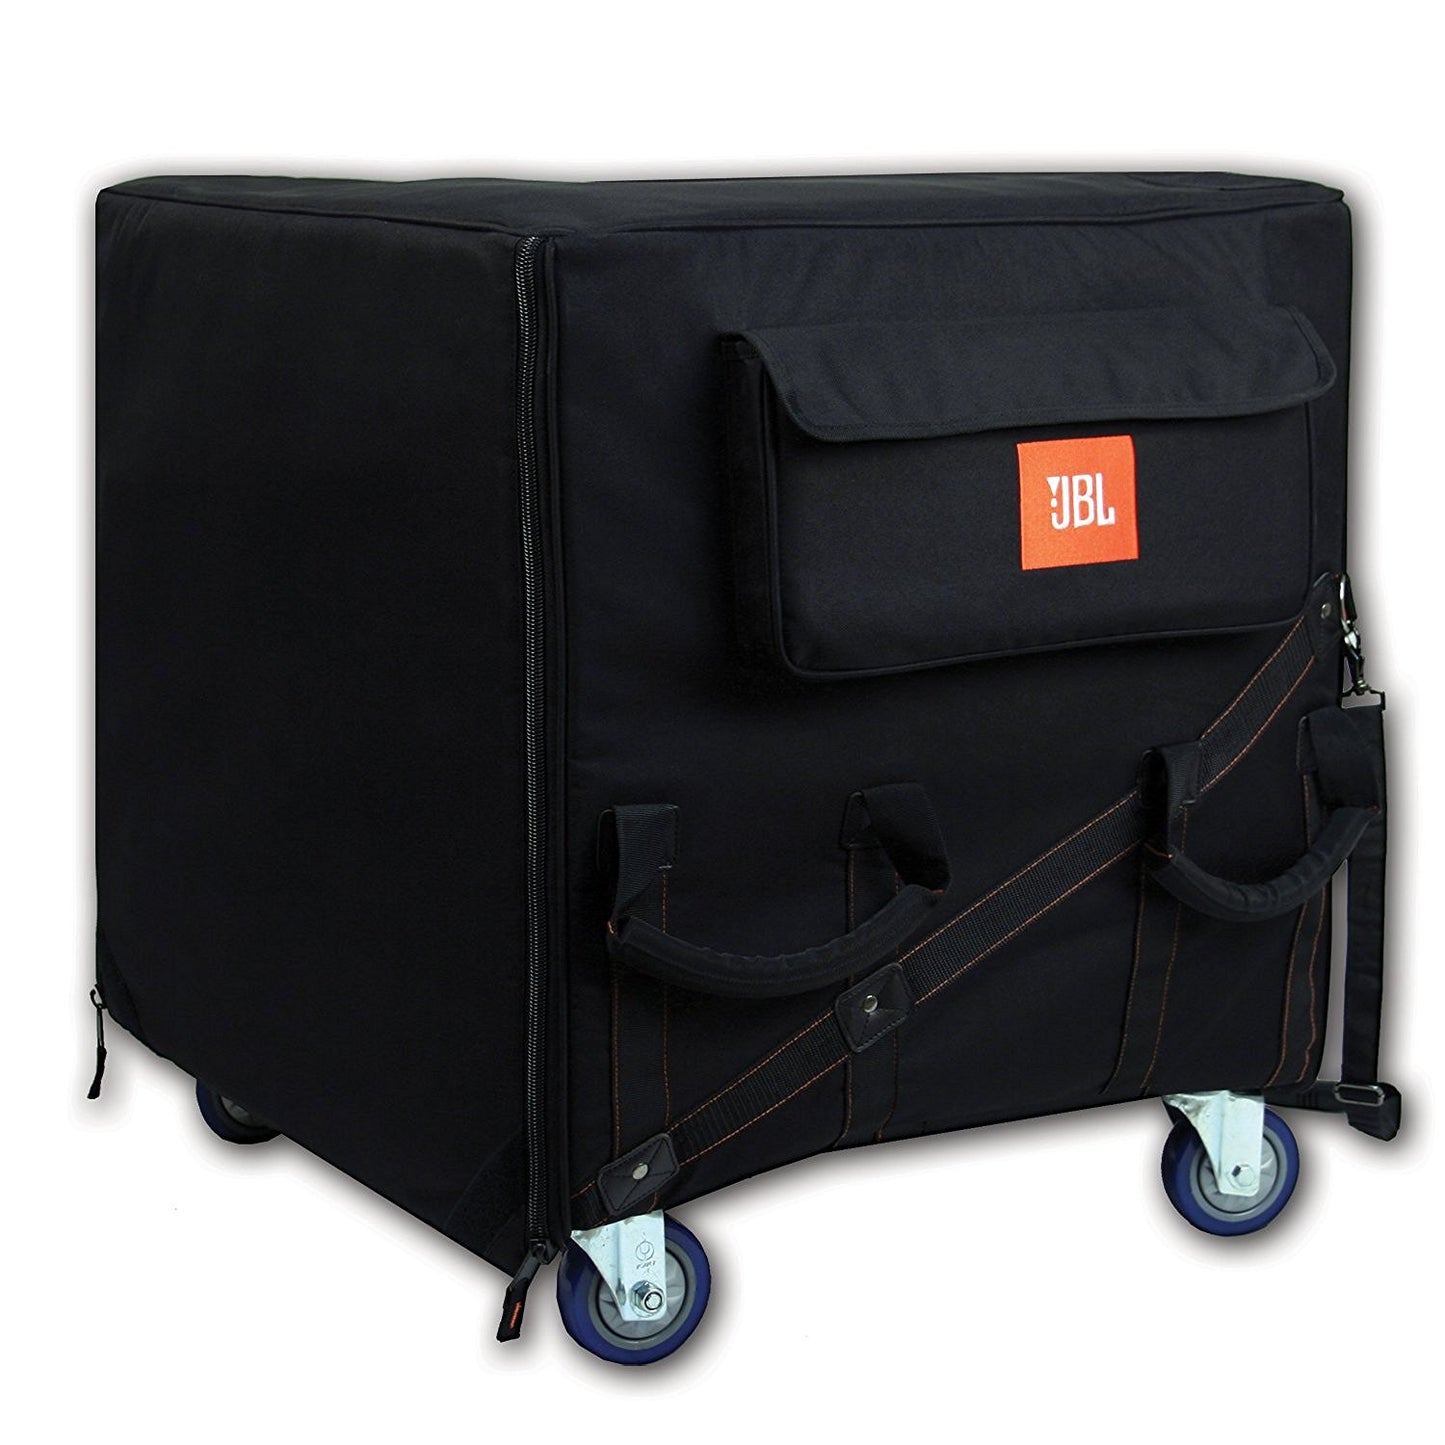 JBL Rolling Sub Transporter Bag for JBL 18" Sub Speaker - Black